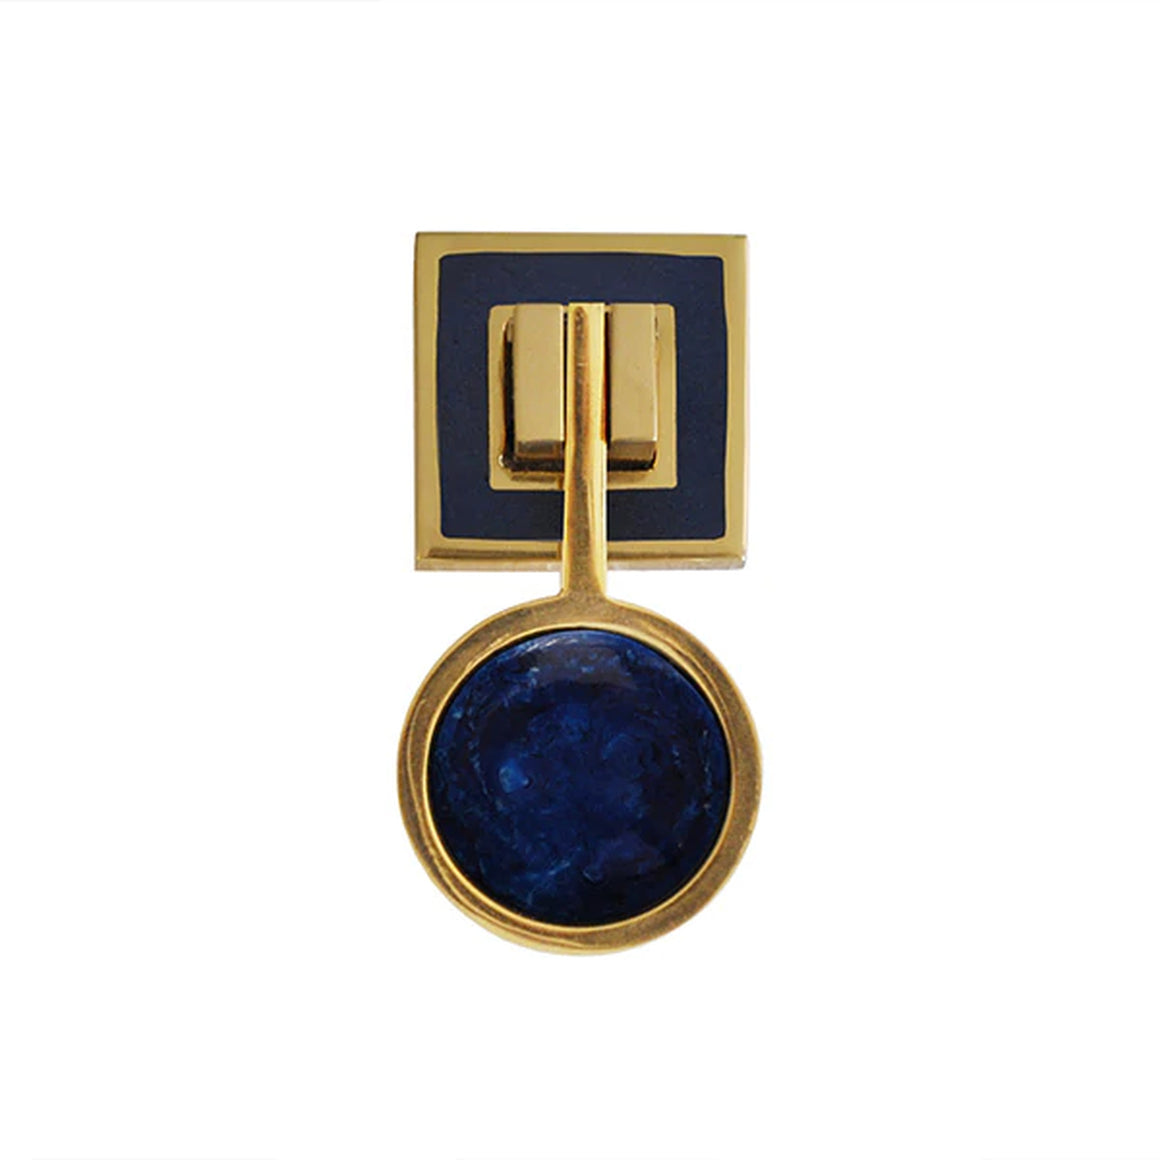 Milan Marble Blue Inset Brass Pull Knob